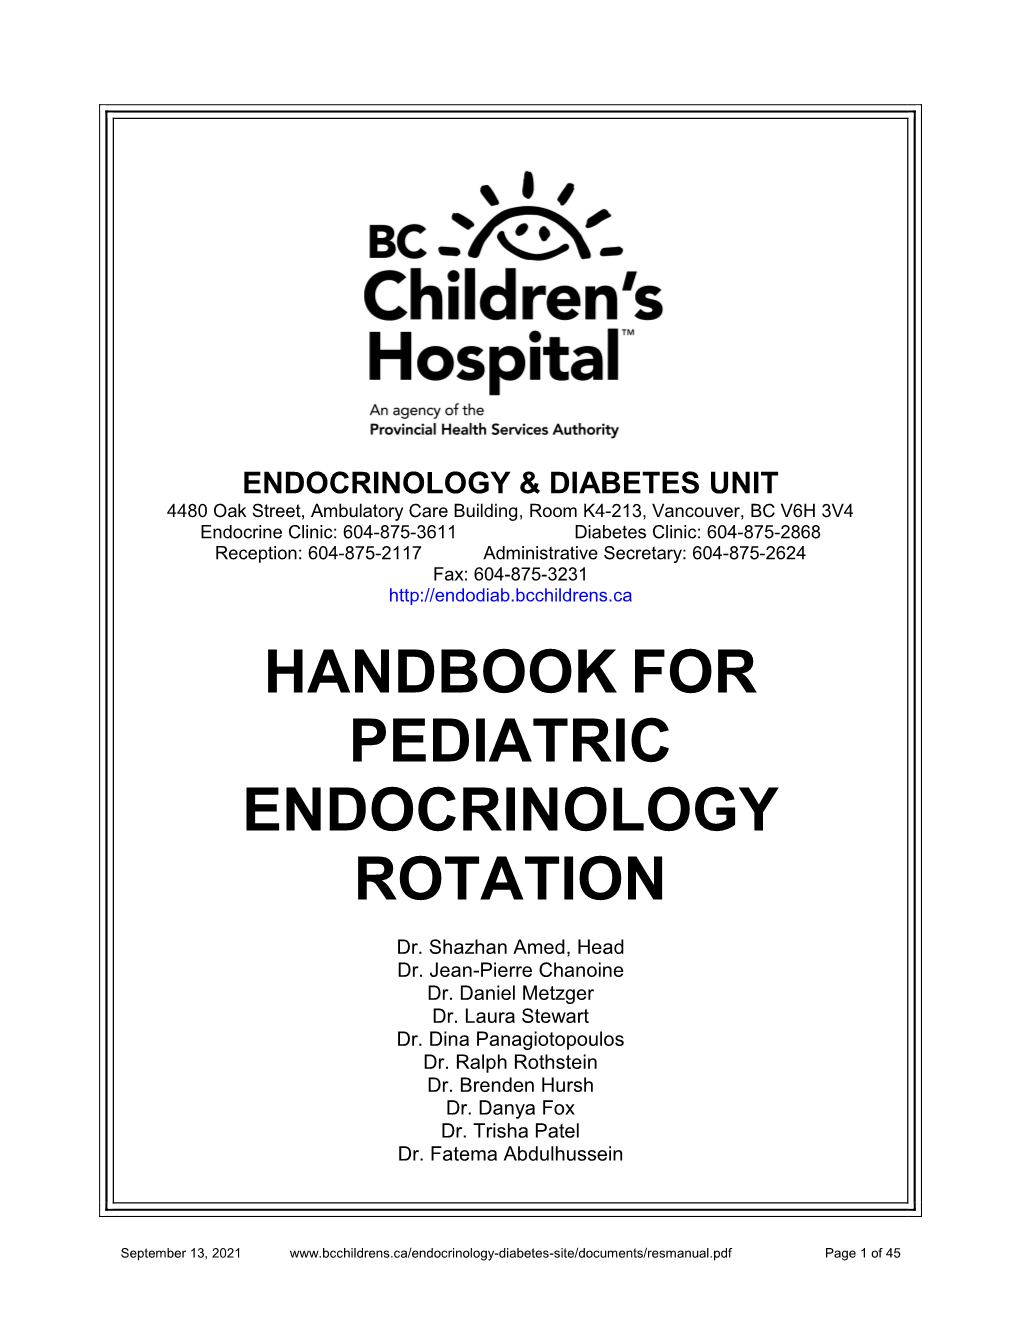 Handbook for Pediatric Endocrinology Rotation